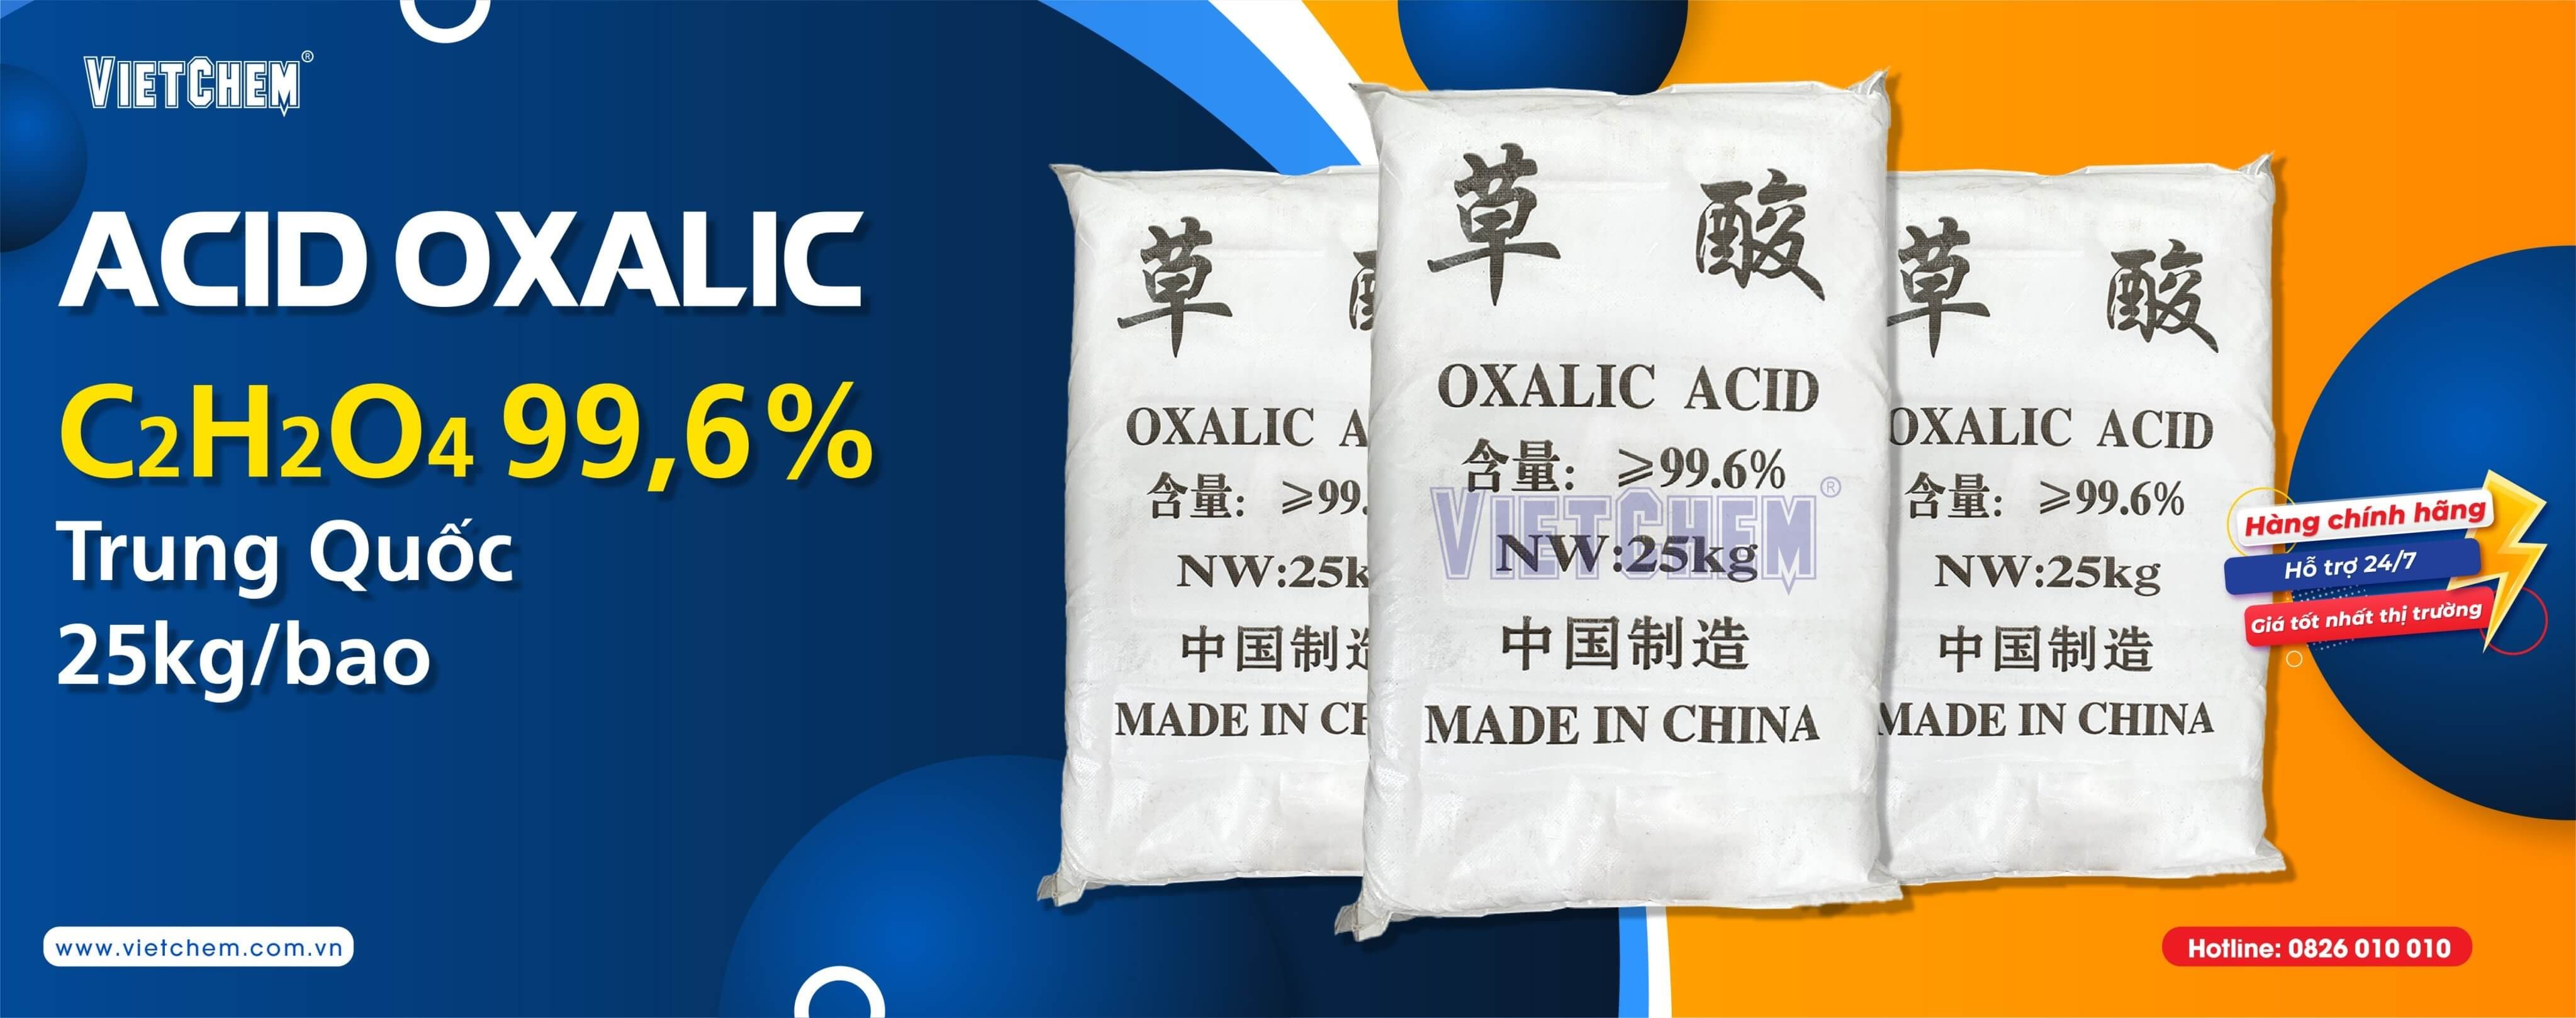 Acid oxalic C2H2O4 99,6%, Trung Quốc, 25kg/bao